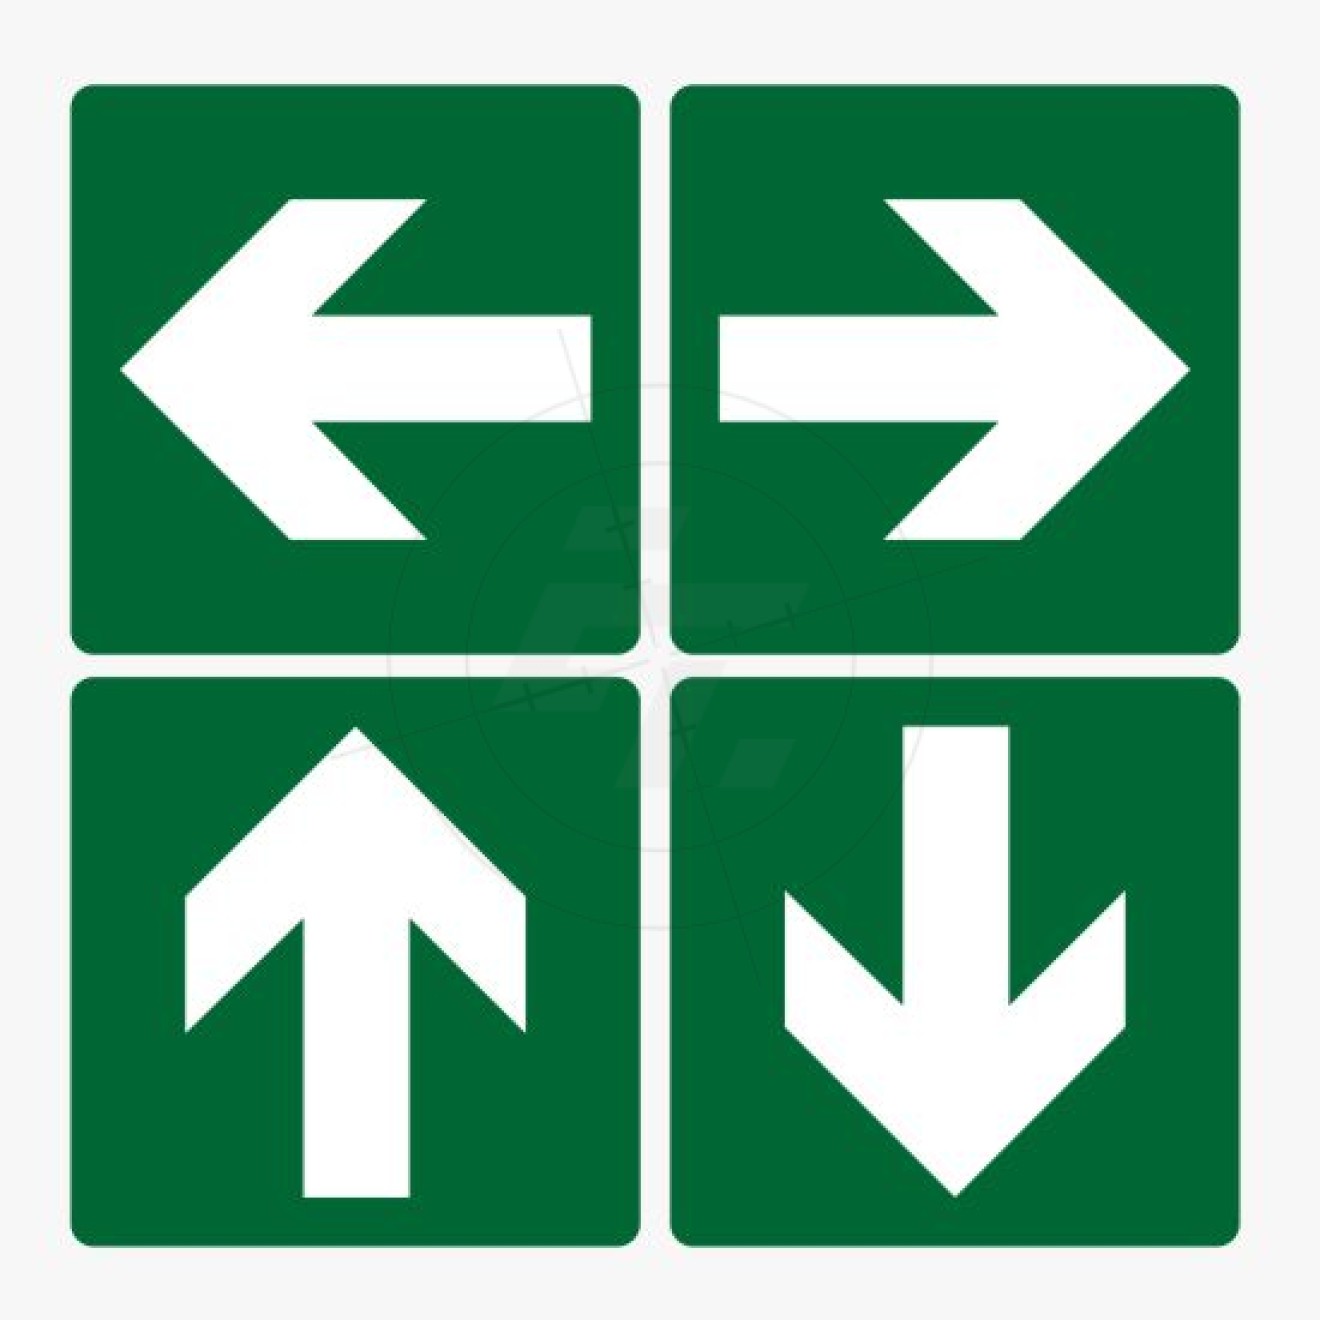 Emergency exit, direction arrow